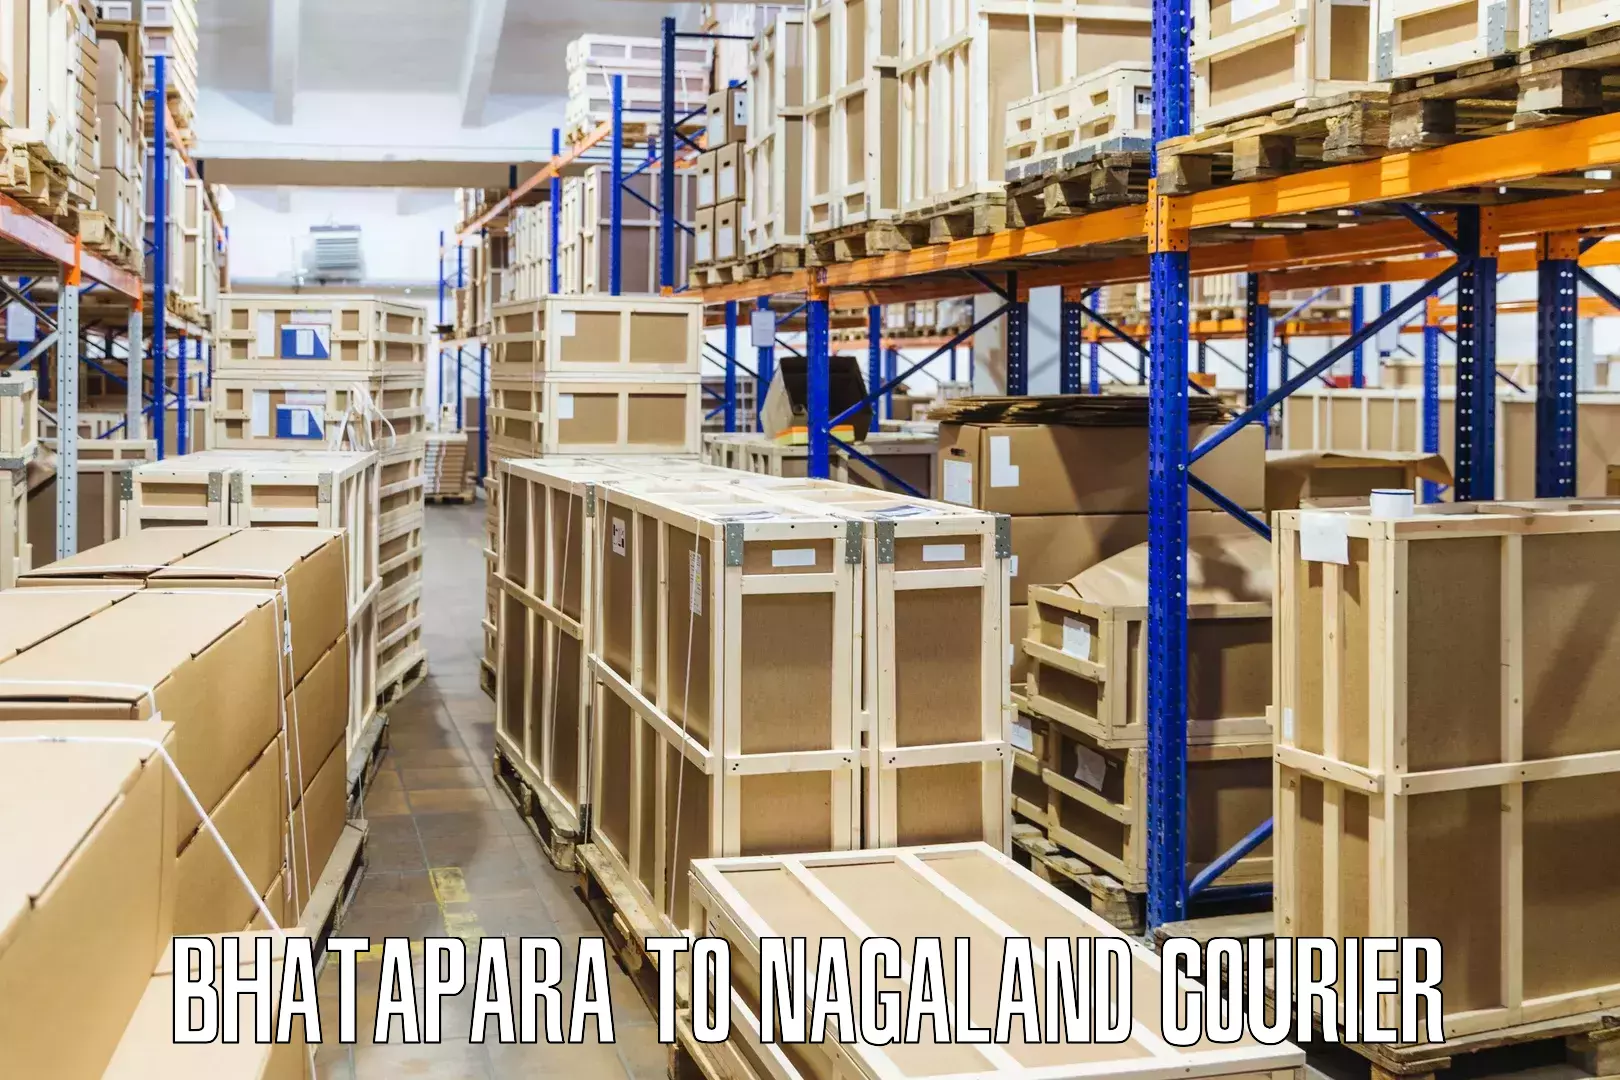 Quick dispatch service Bhatapara to Nagaland